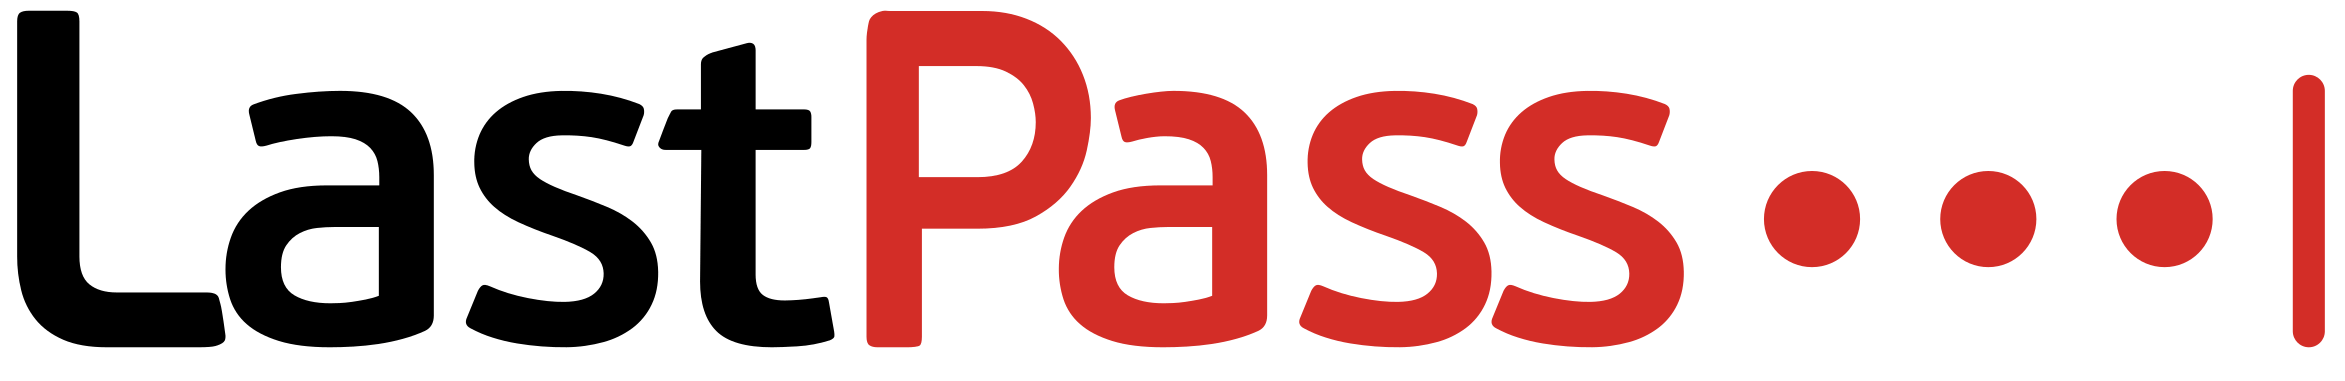 Lastpass logo.